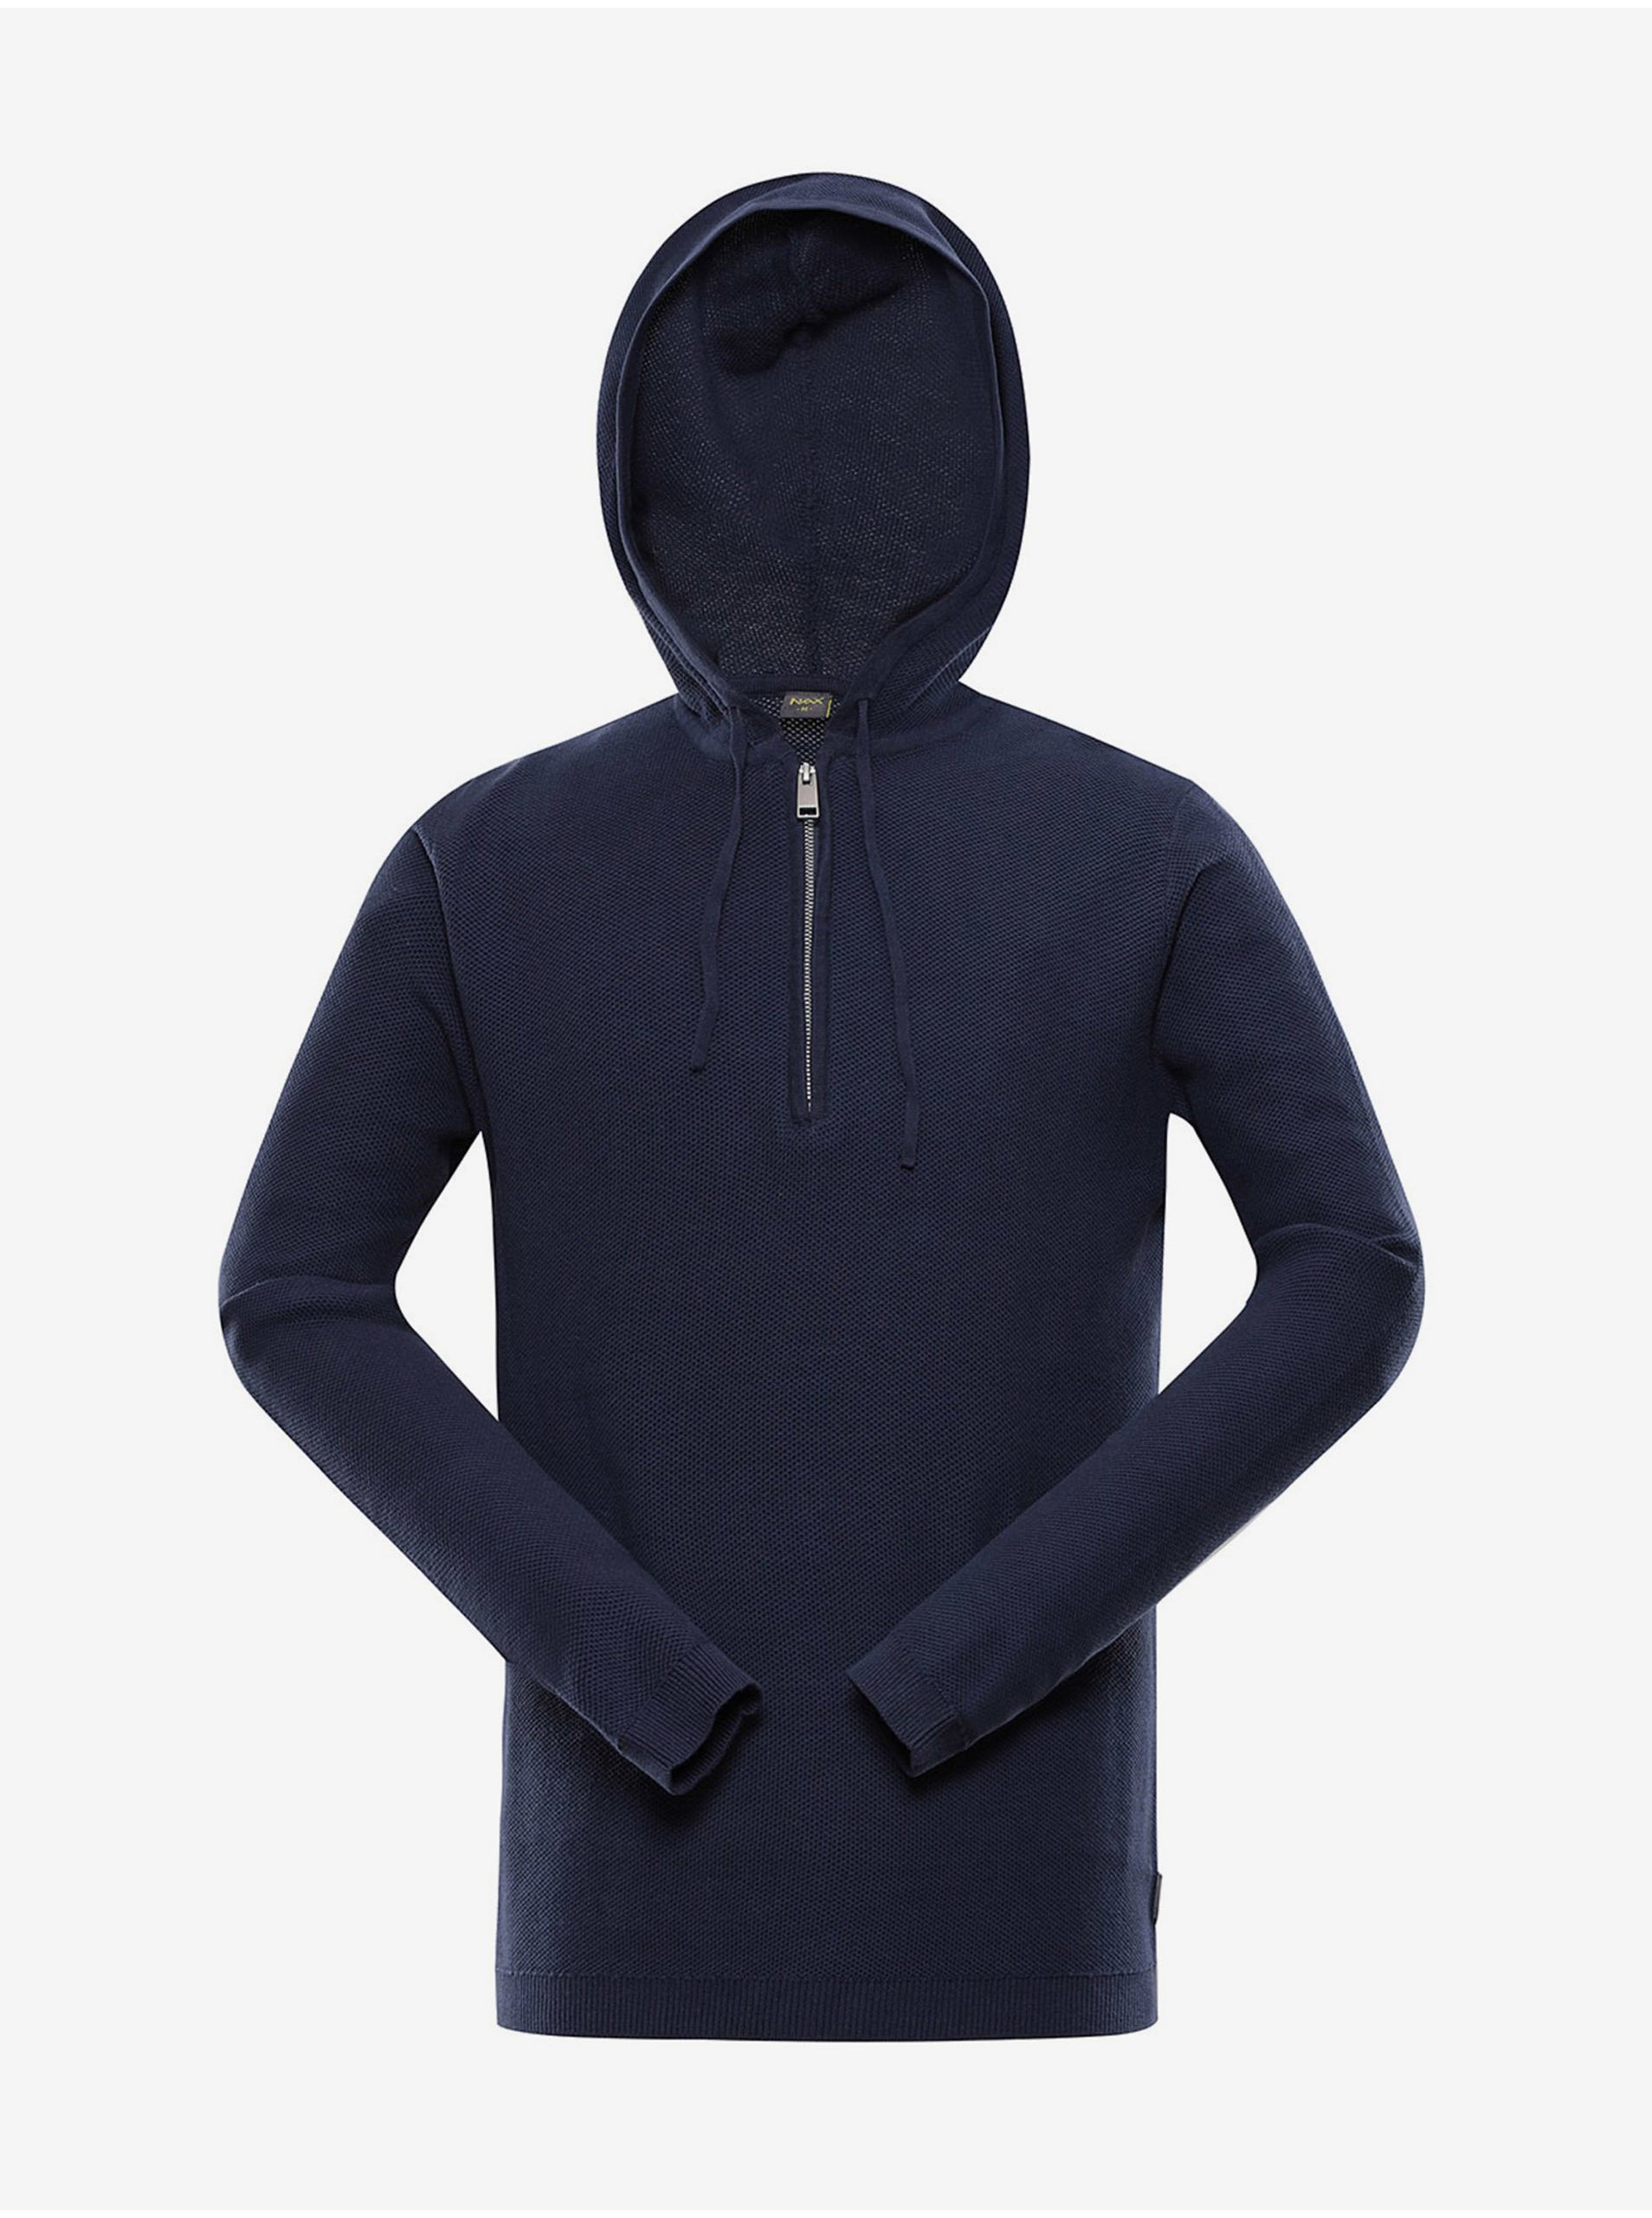 E-shop Tmavě modrý pánský svetr s kapucí NAX Polin